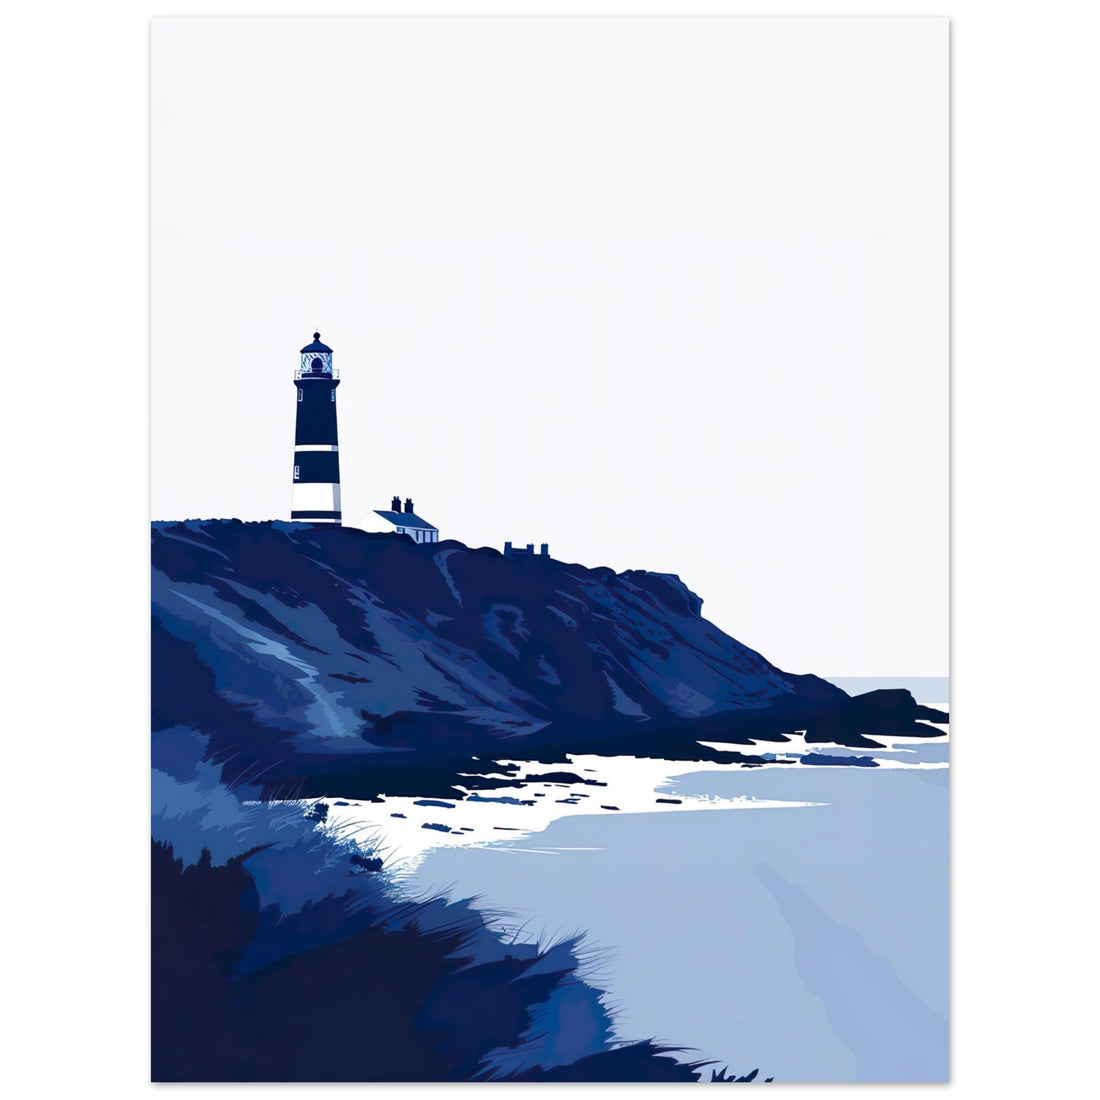 The Blue Lighthouse, coastal art, seascape, The Blue Lighthouse, #illieeart